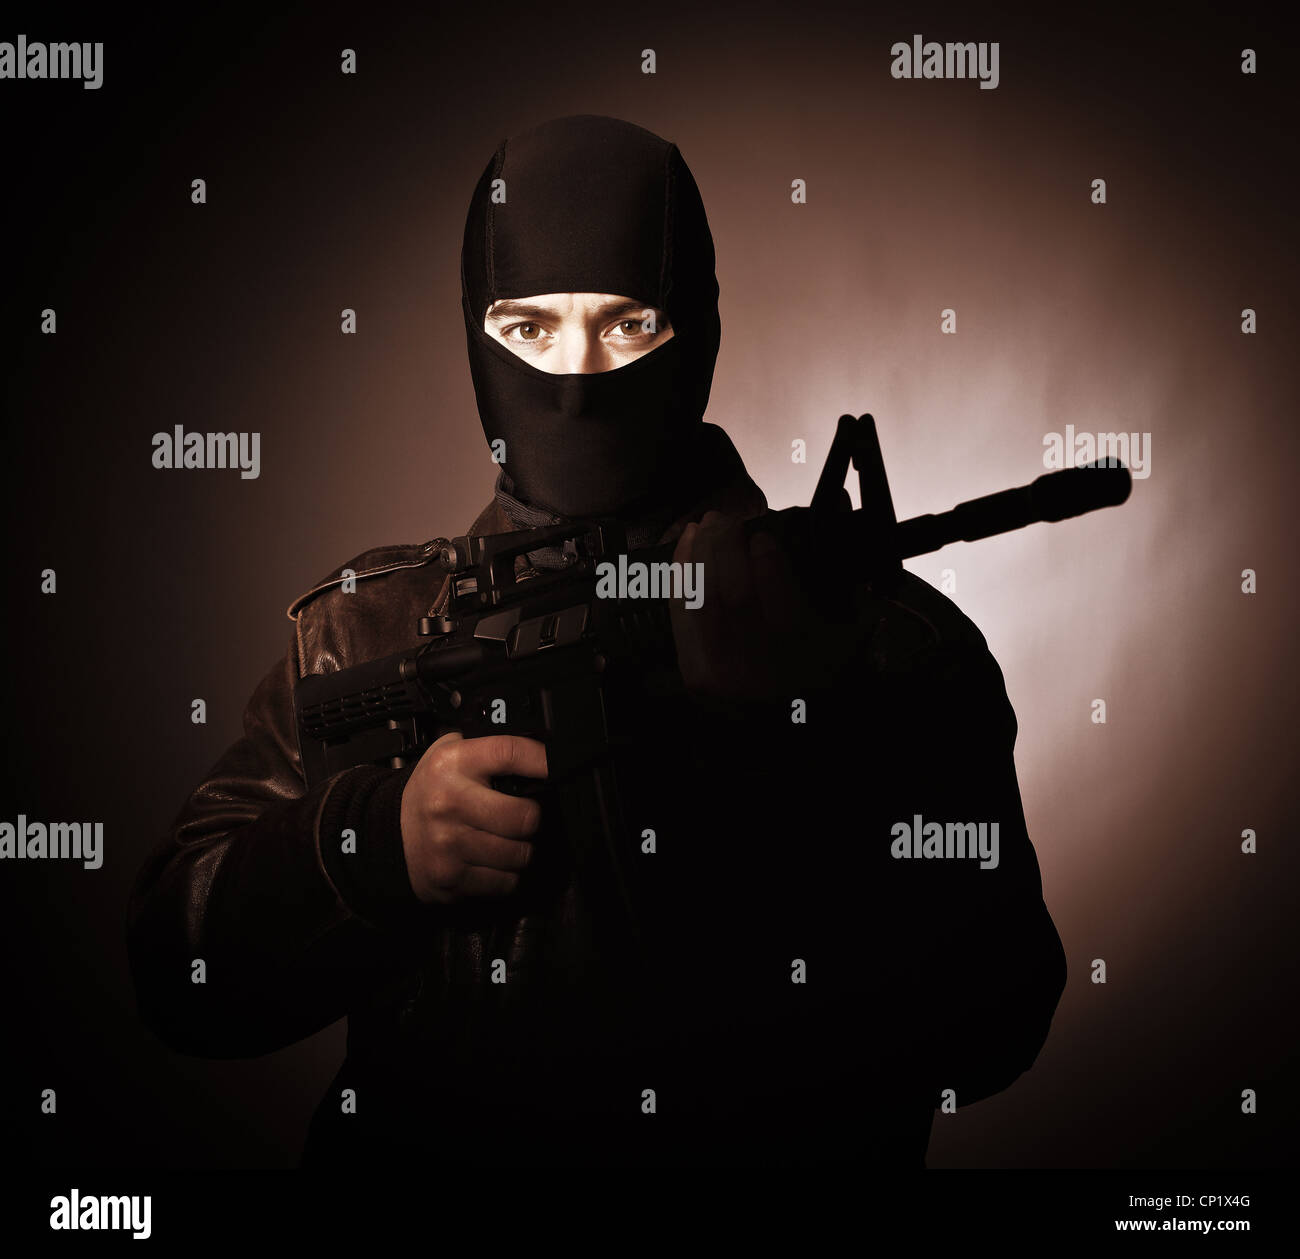 portrait of terrorist with automatic rifle Stock Photo